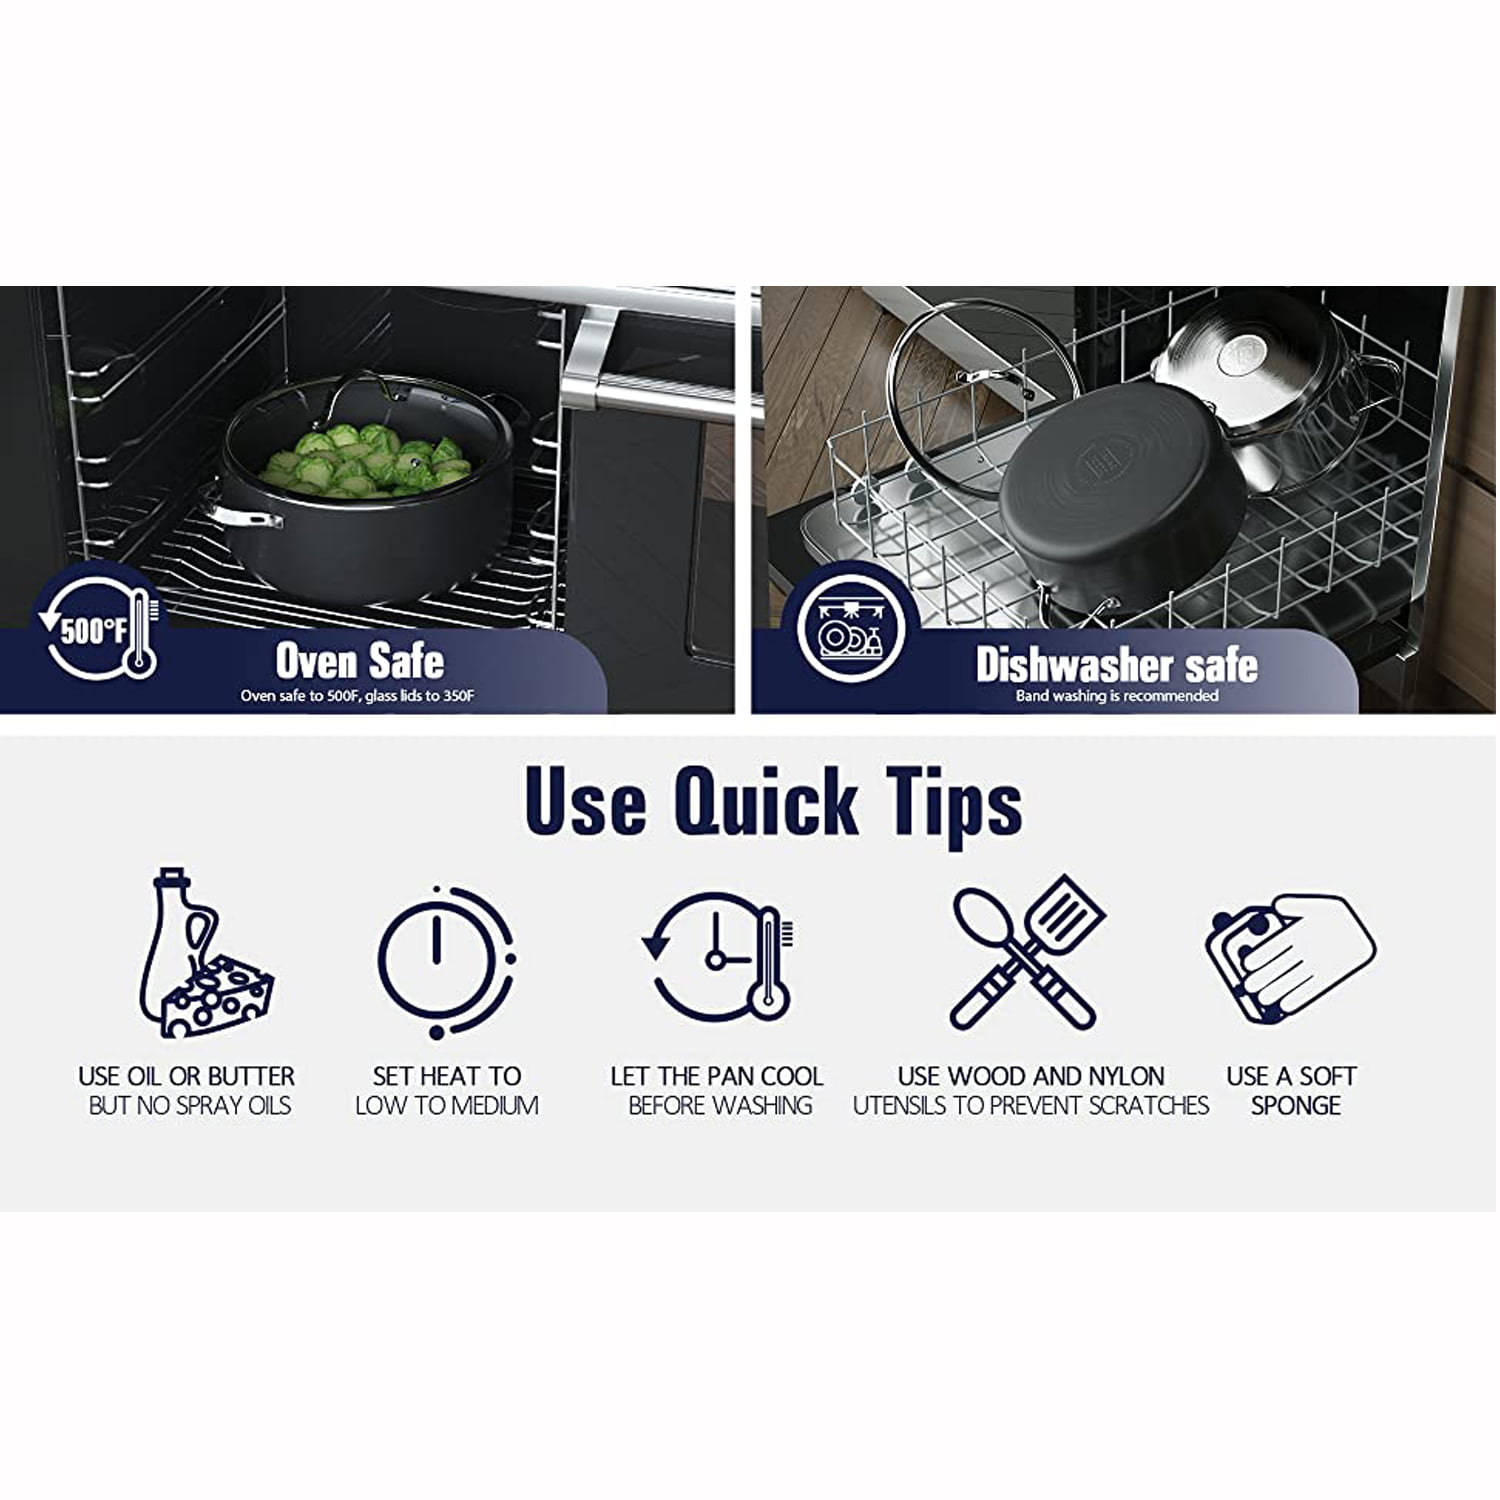 Walchoice 2 Quart Saucepan with Lid, 18/10 Stainless Steel Soup Pot for Home Kitchen, Transparent Lid & Dishwasher Safe - 2 qt